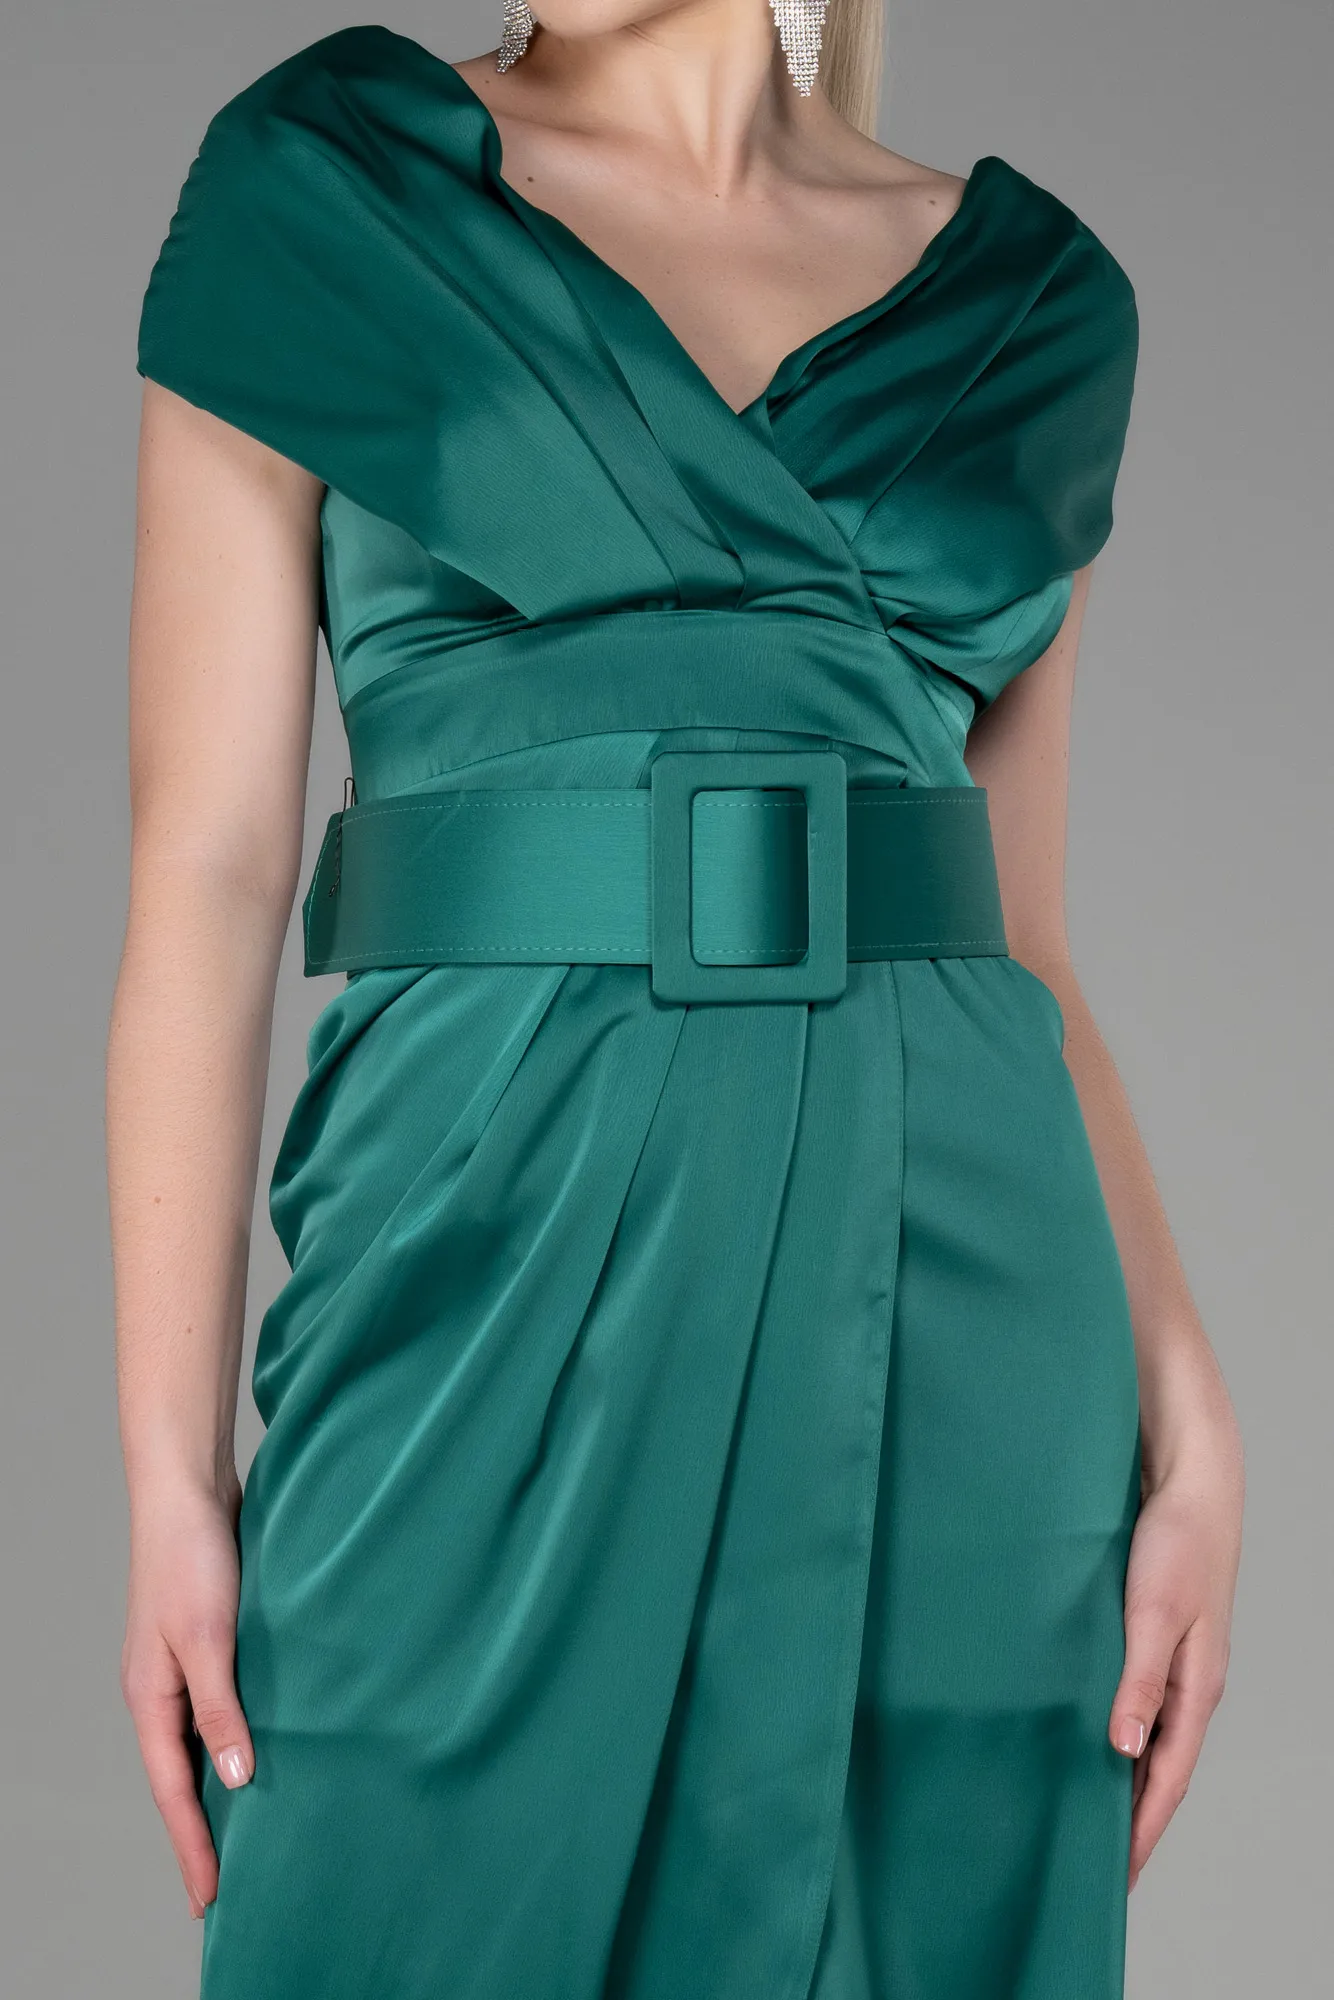 Green-Short Satin Invitation Dress ABK1107